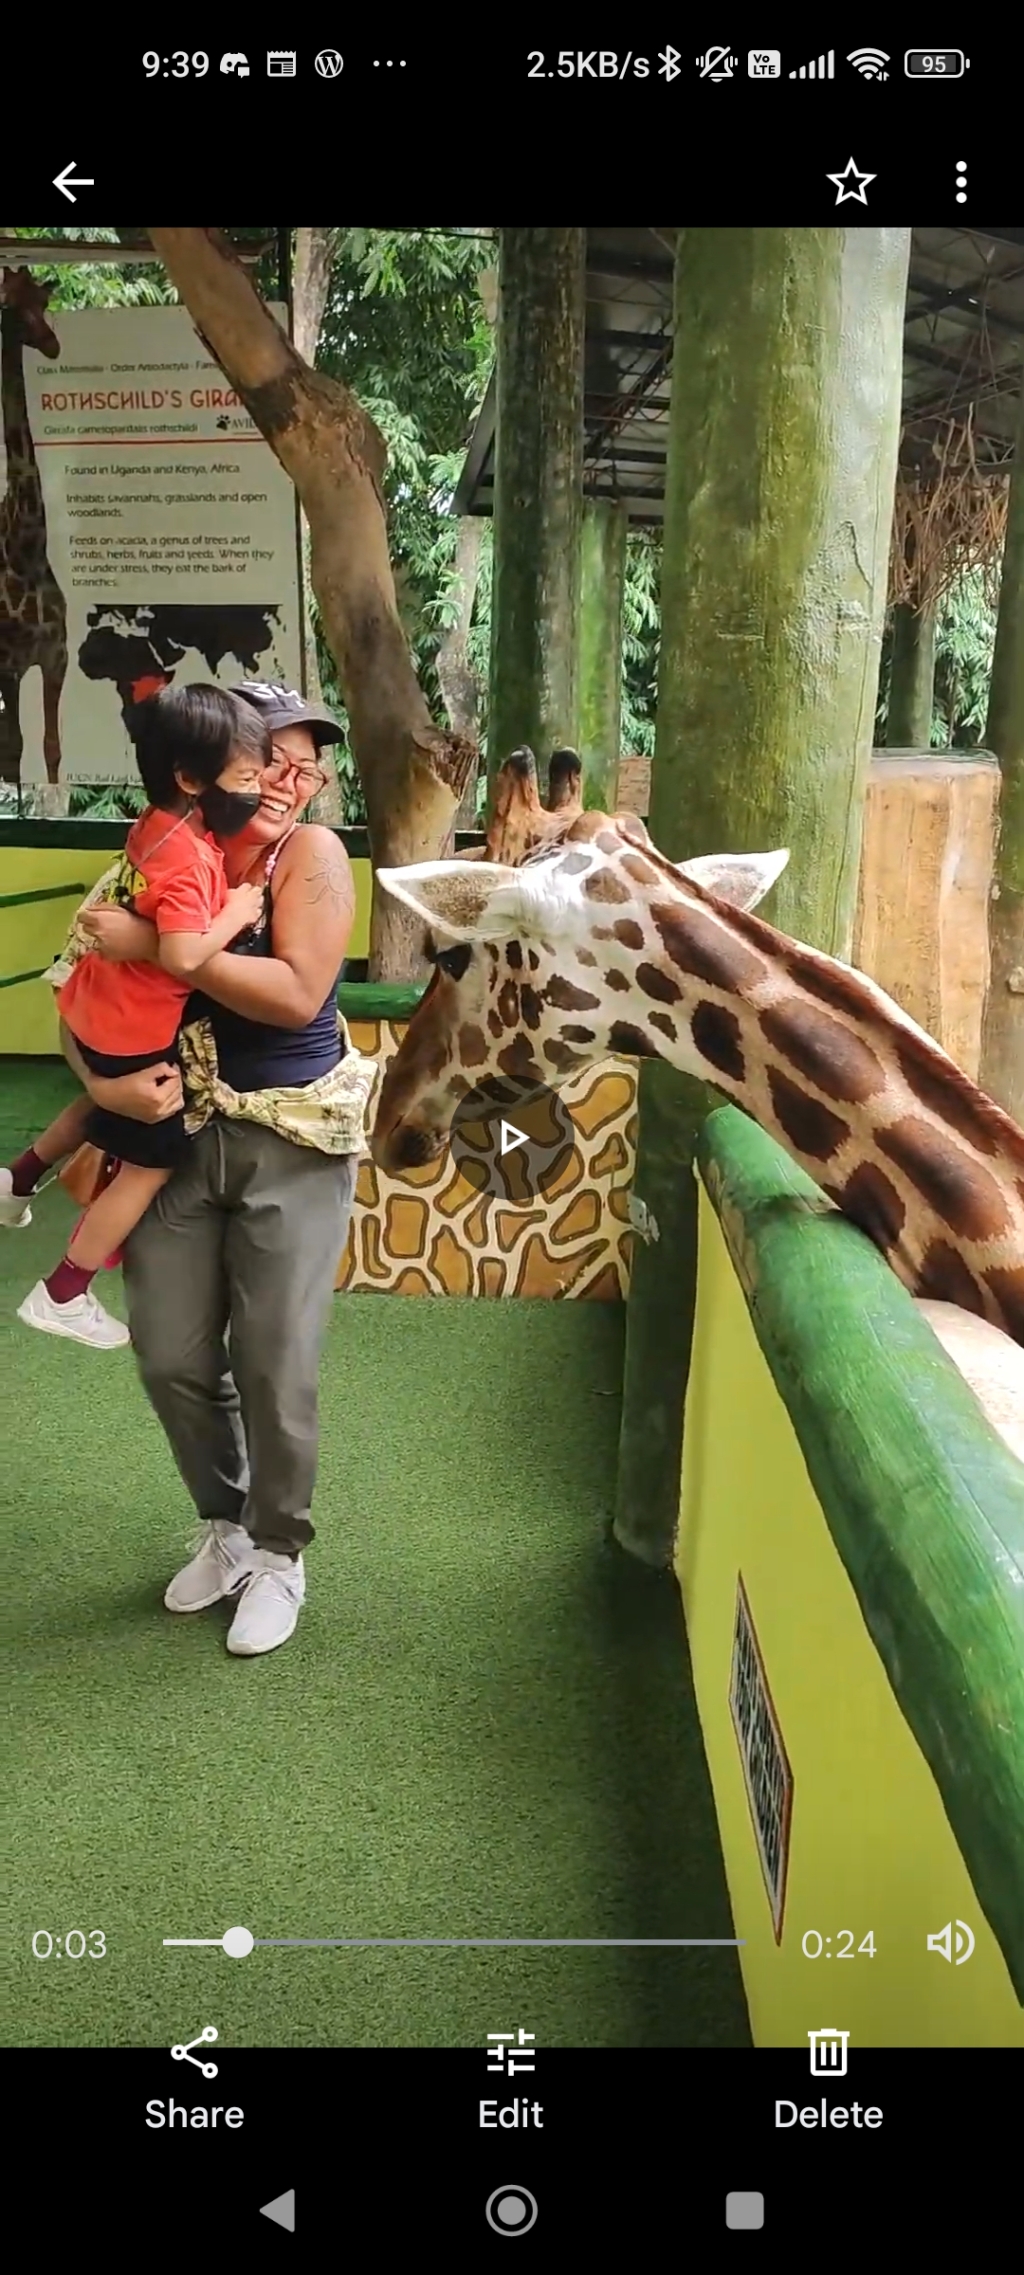 Fun with Barry the Giraffe – Avilon Zoo